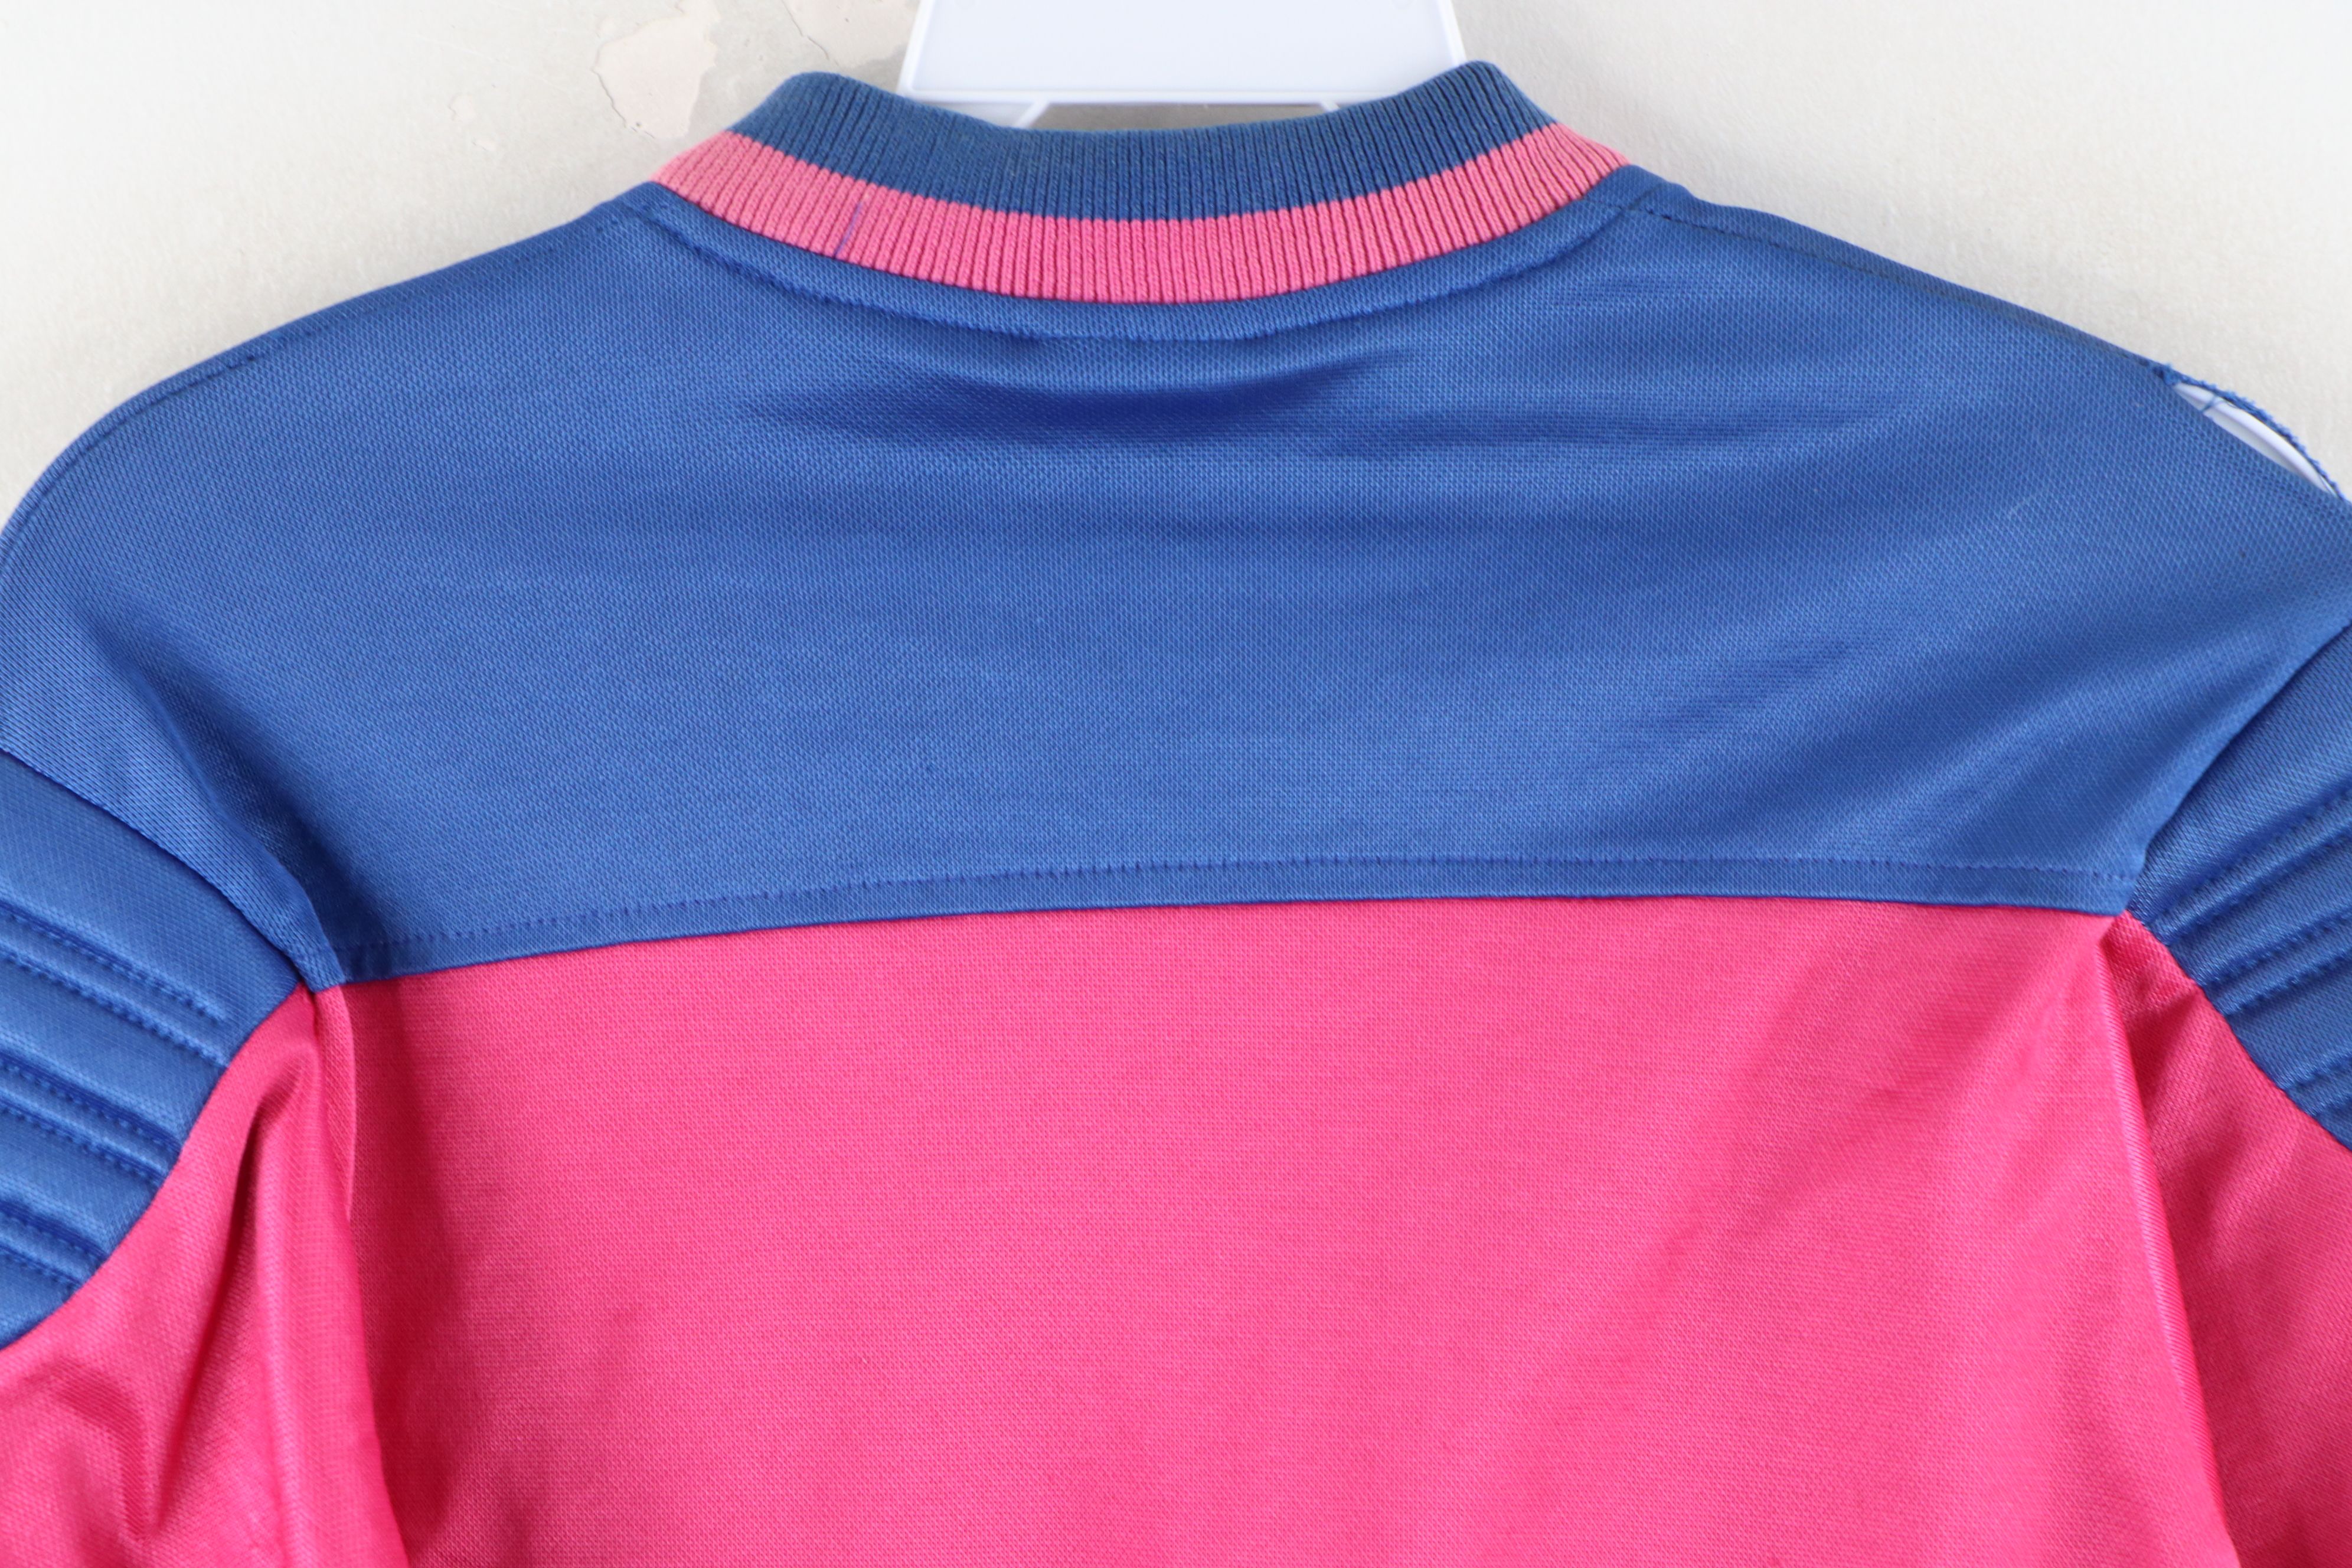 Vintage Vintage 90s Umbro Distressed Padded Goalie Jersey Pink USA Size US S / EU 44-46 / 1 - 9 Thumbnail